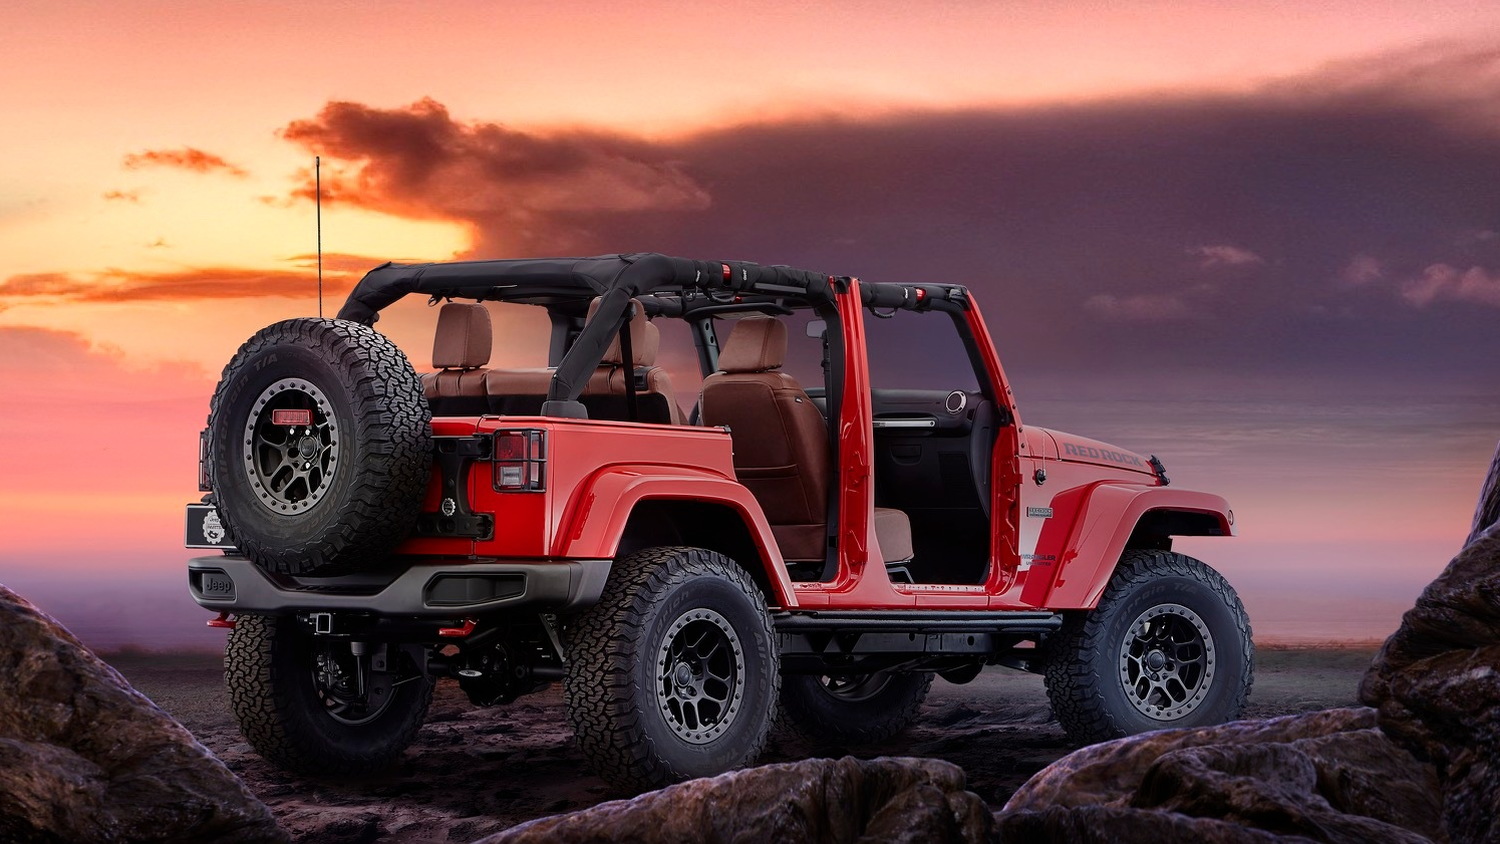 Jeep Wrangler Red Rock concept, 2015 SEMA show